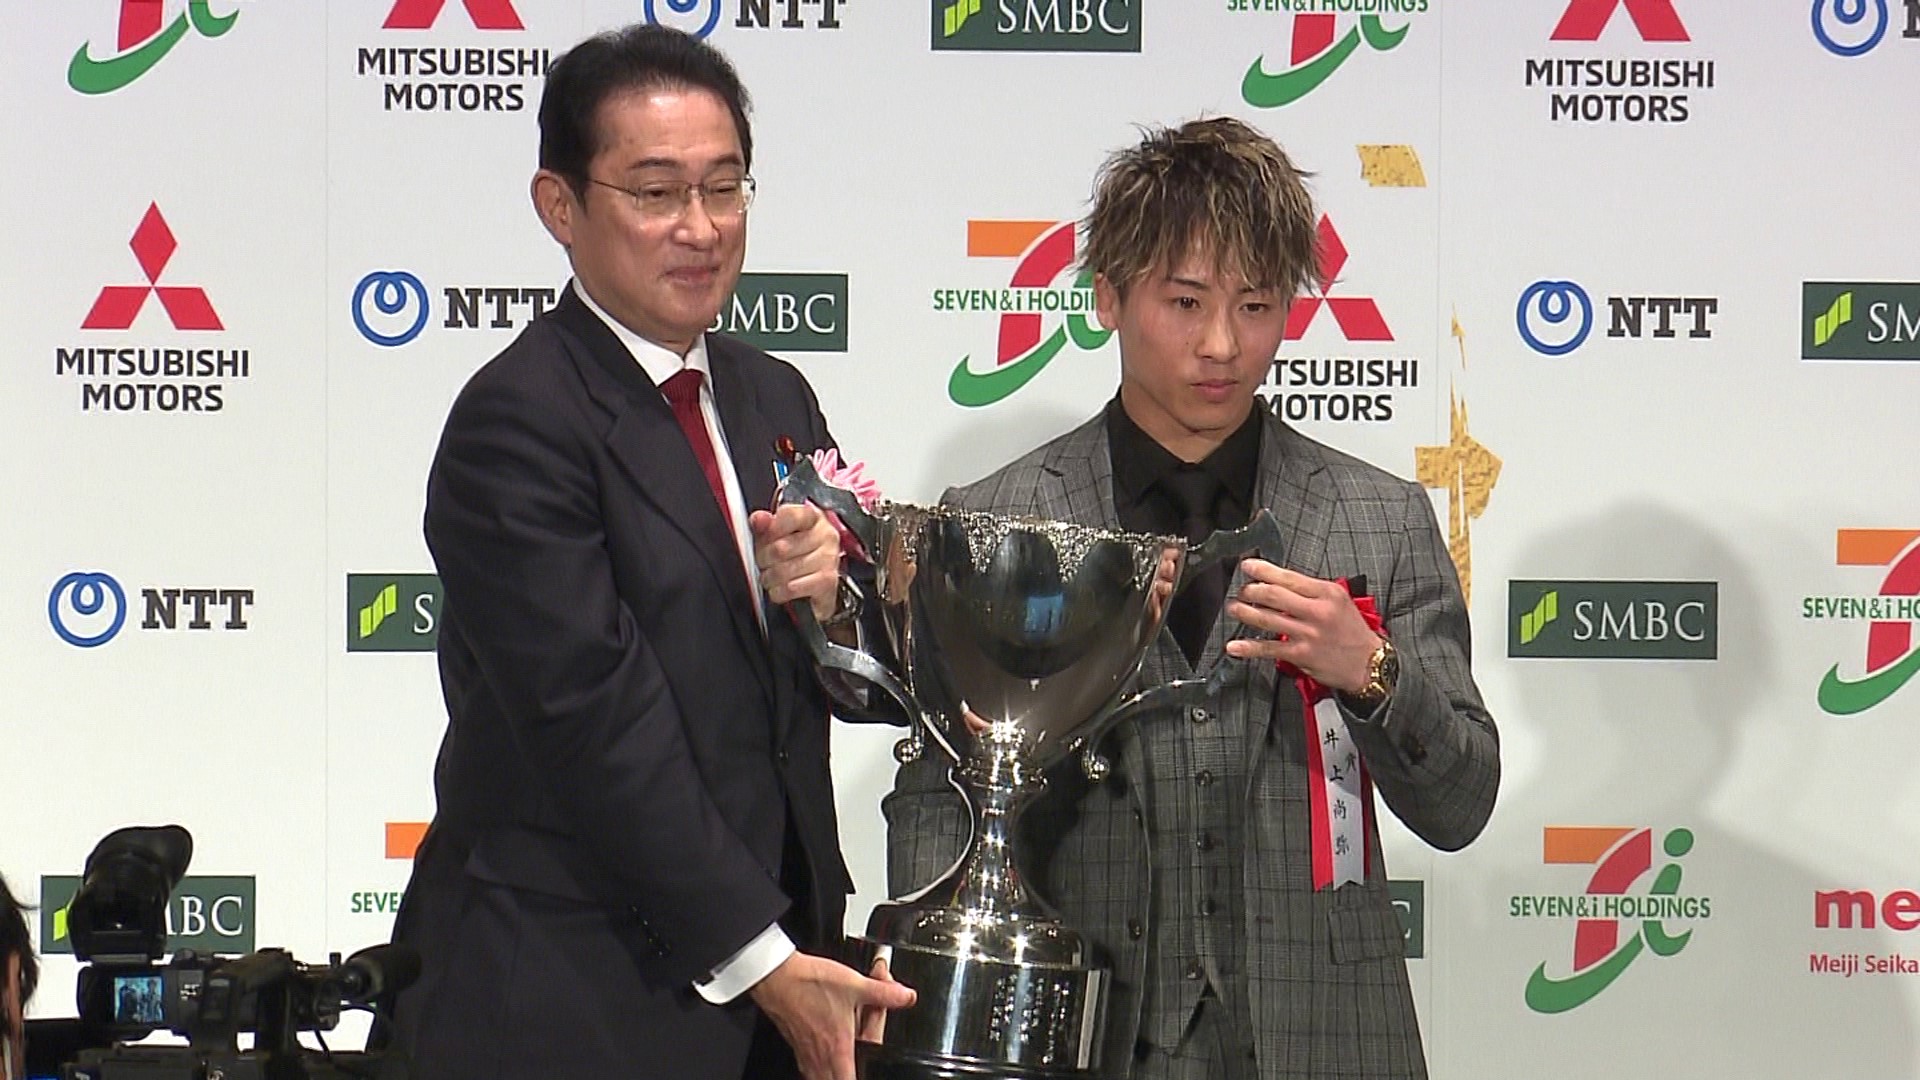 Prime Minister Kishida presenting the Prime Minister’s Cup